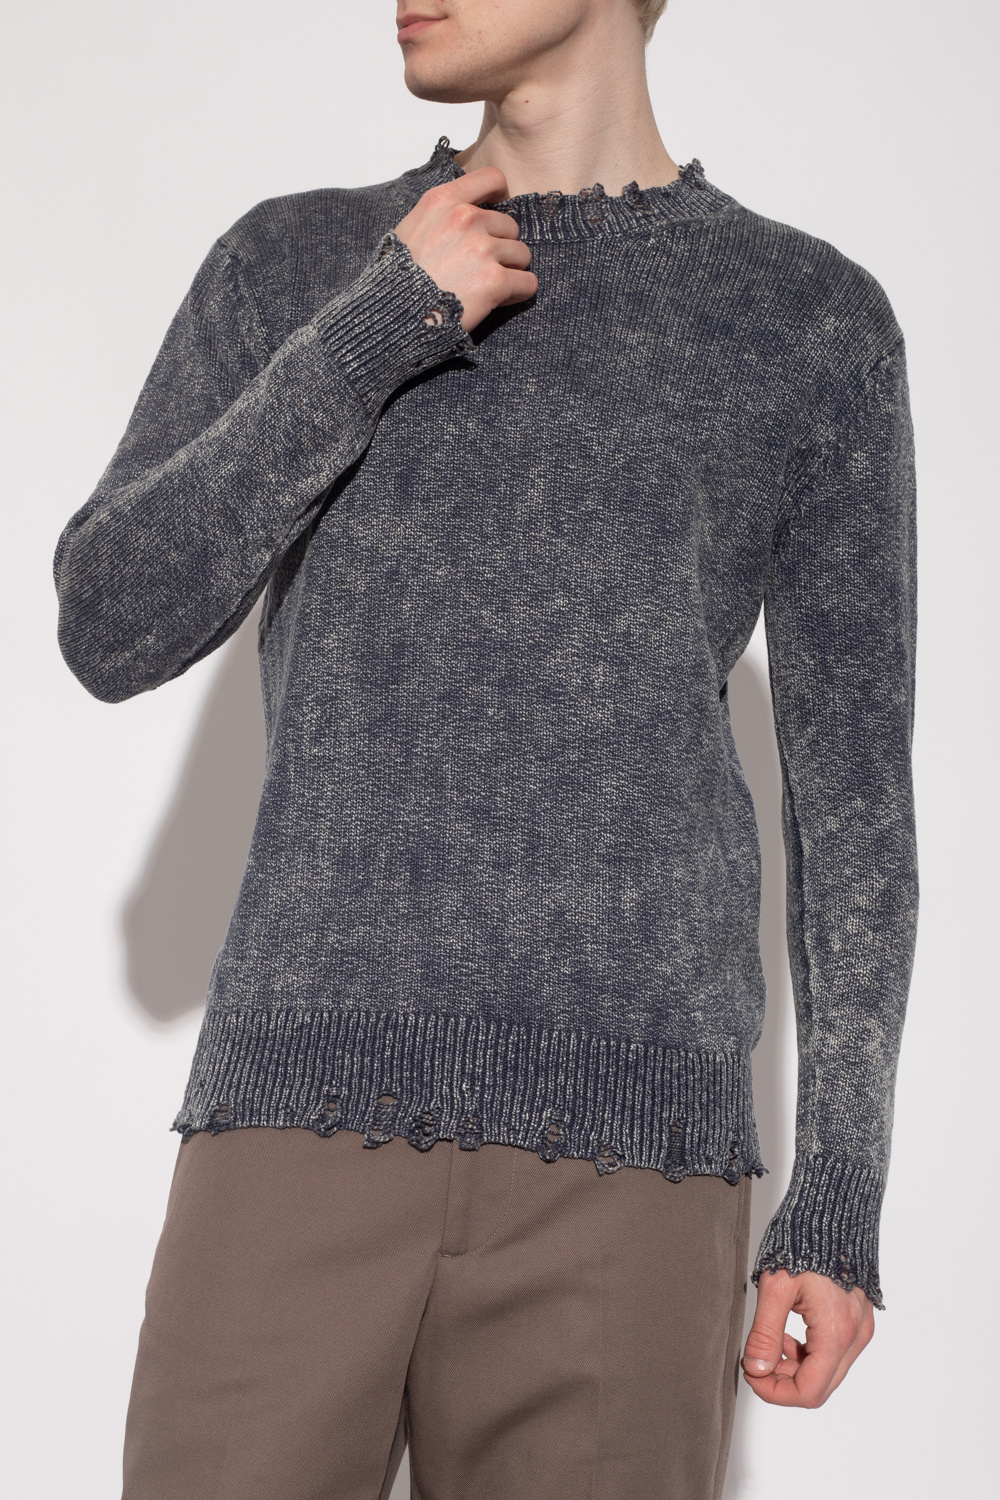 Acne Studios Distressed sweater